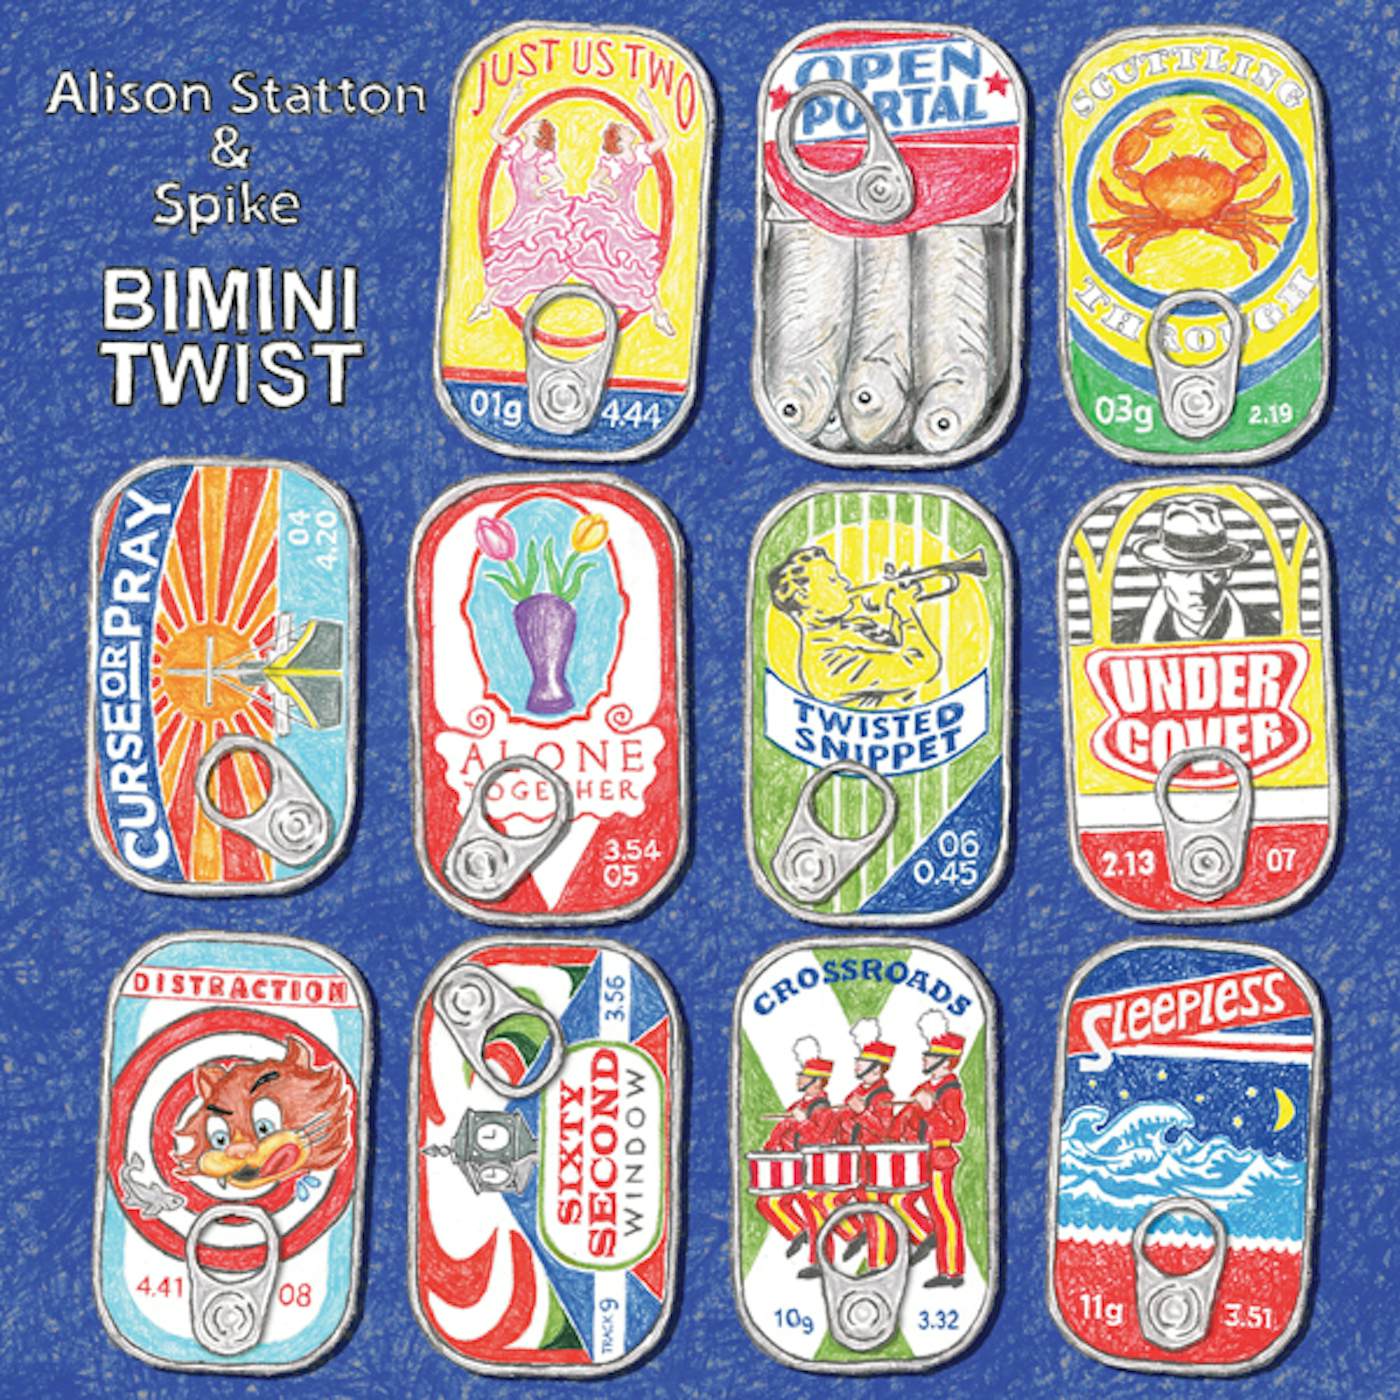 Alison Statton & Spike Bimini Twist Vinyl Record